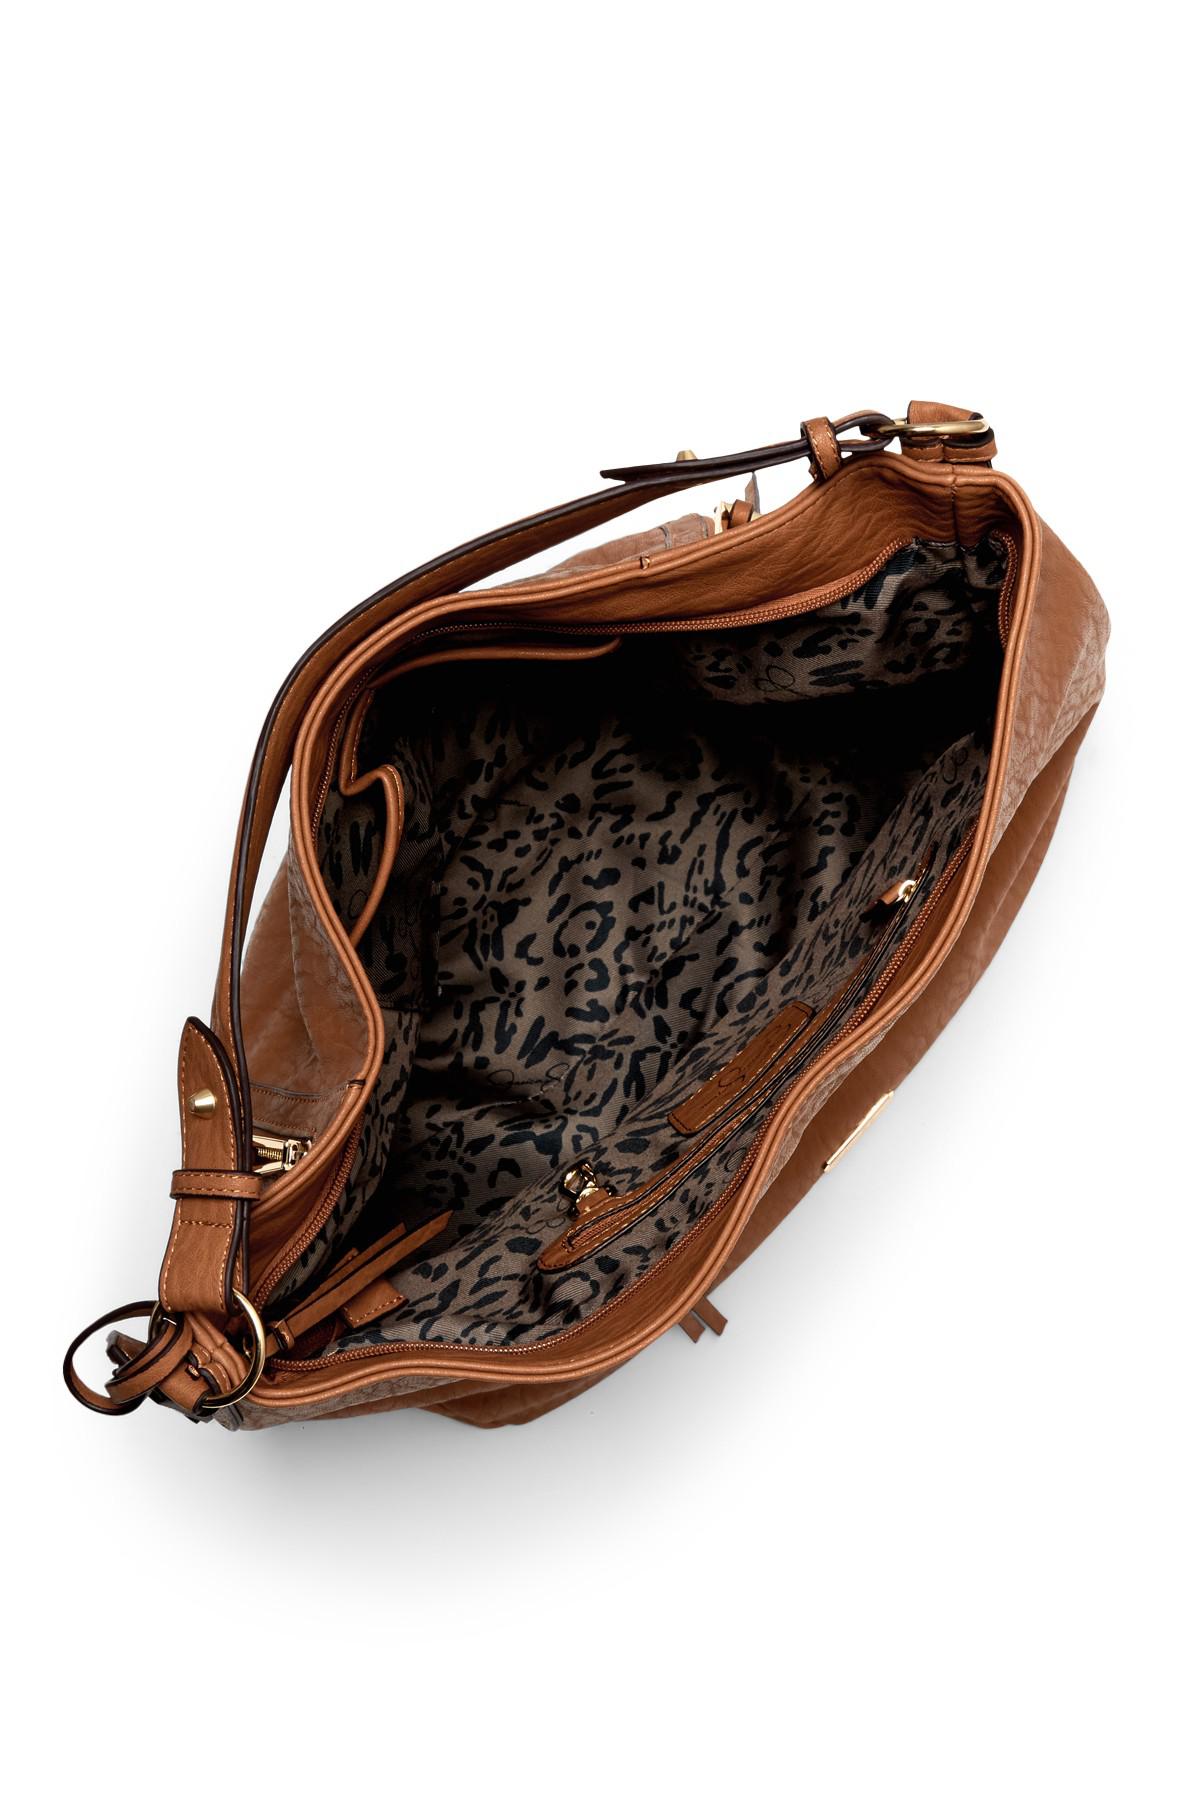 Jessica Simpson Handbags : Bags & Accessories 